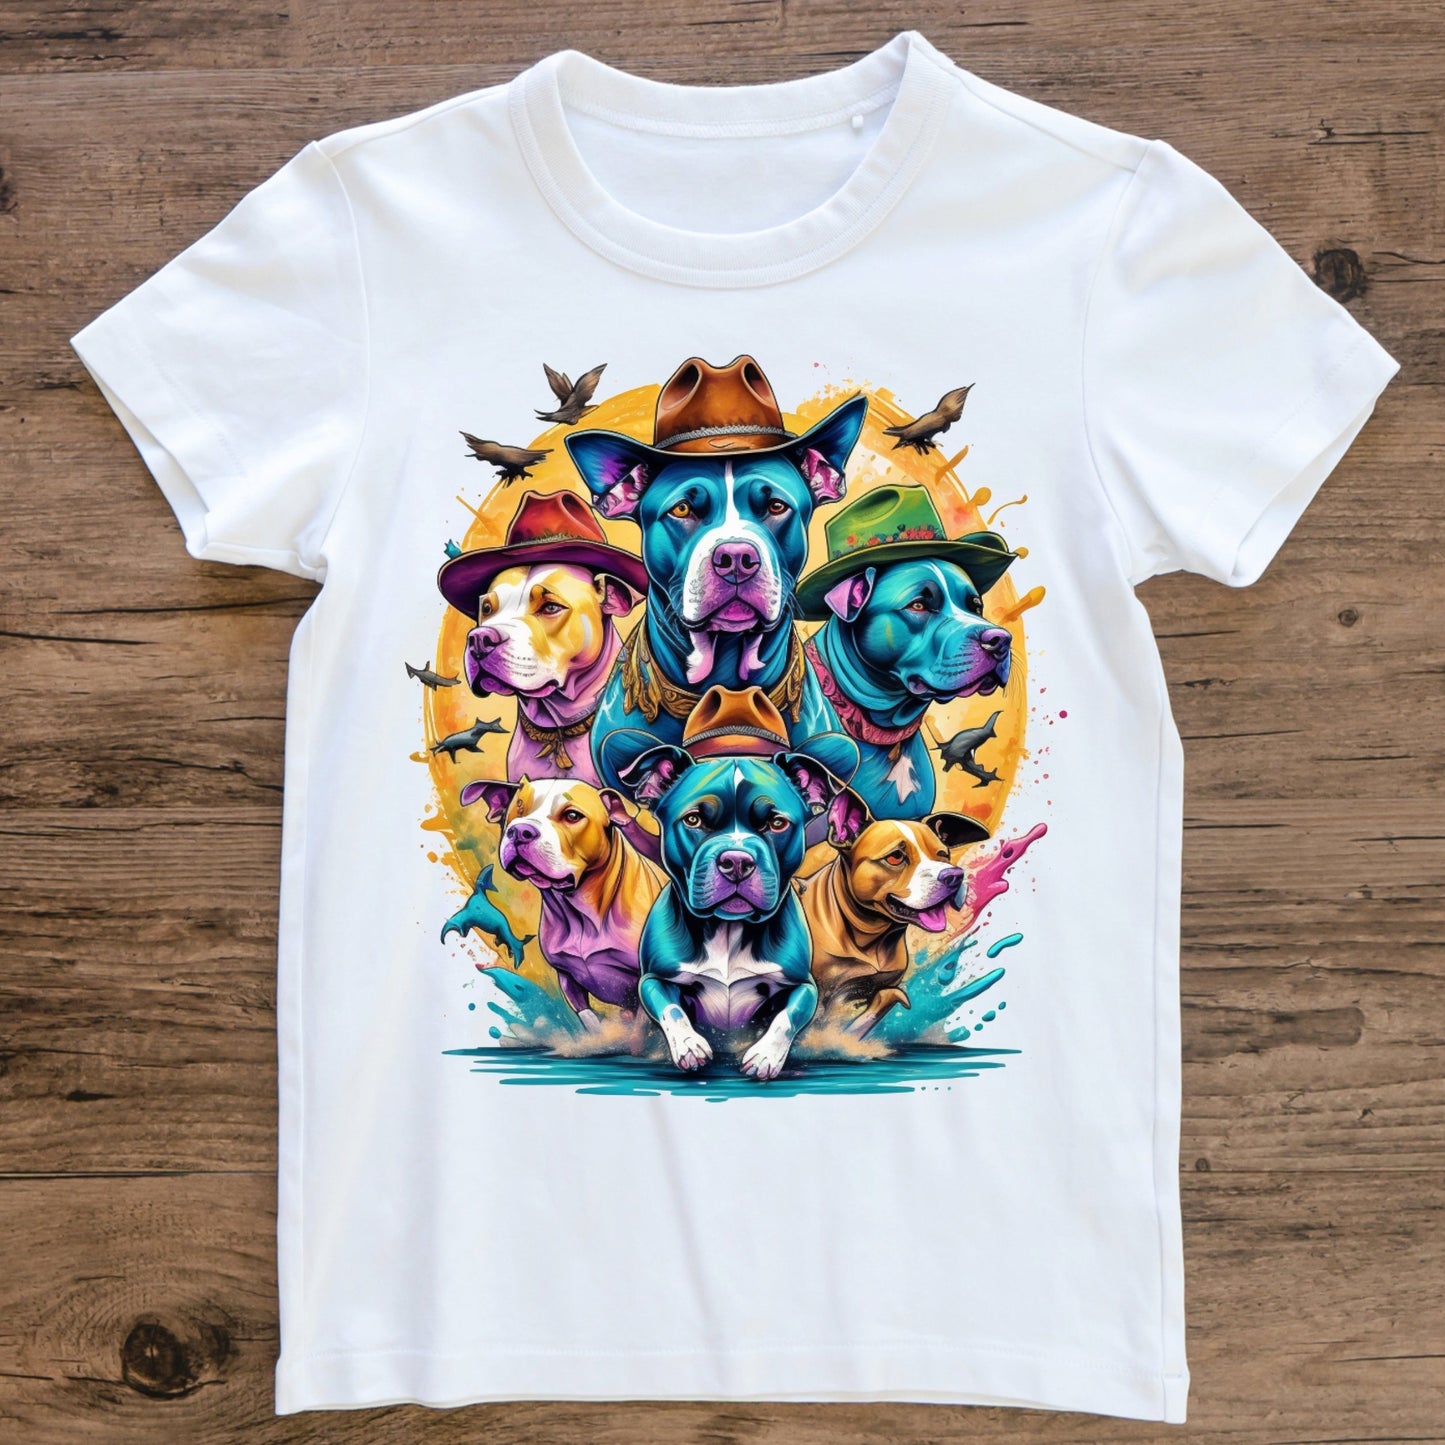 Pitbull breed dogs playing splash art Men's t-shirt - Premium t-shirt from Lees Krazy Teez - Just $24.95! Shop now at Lees Krazy Teez